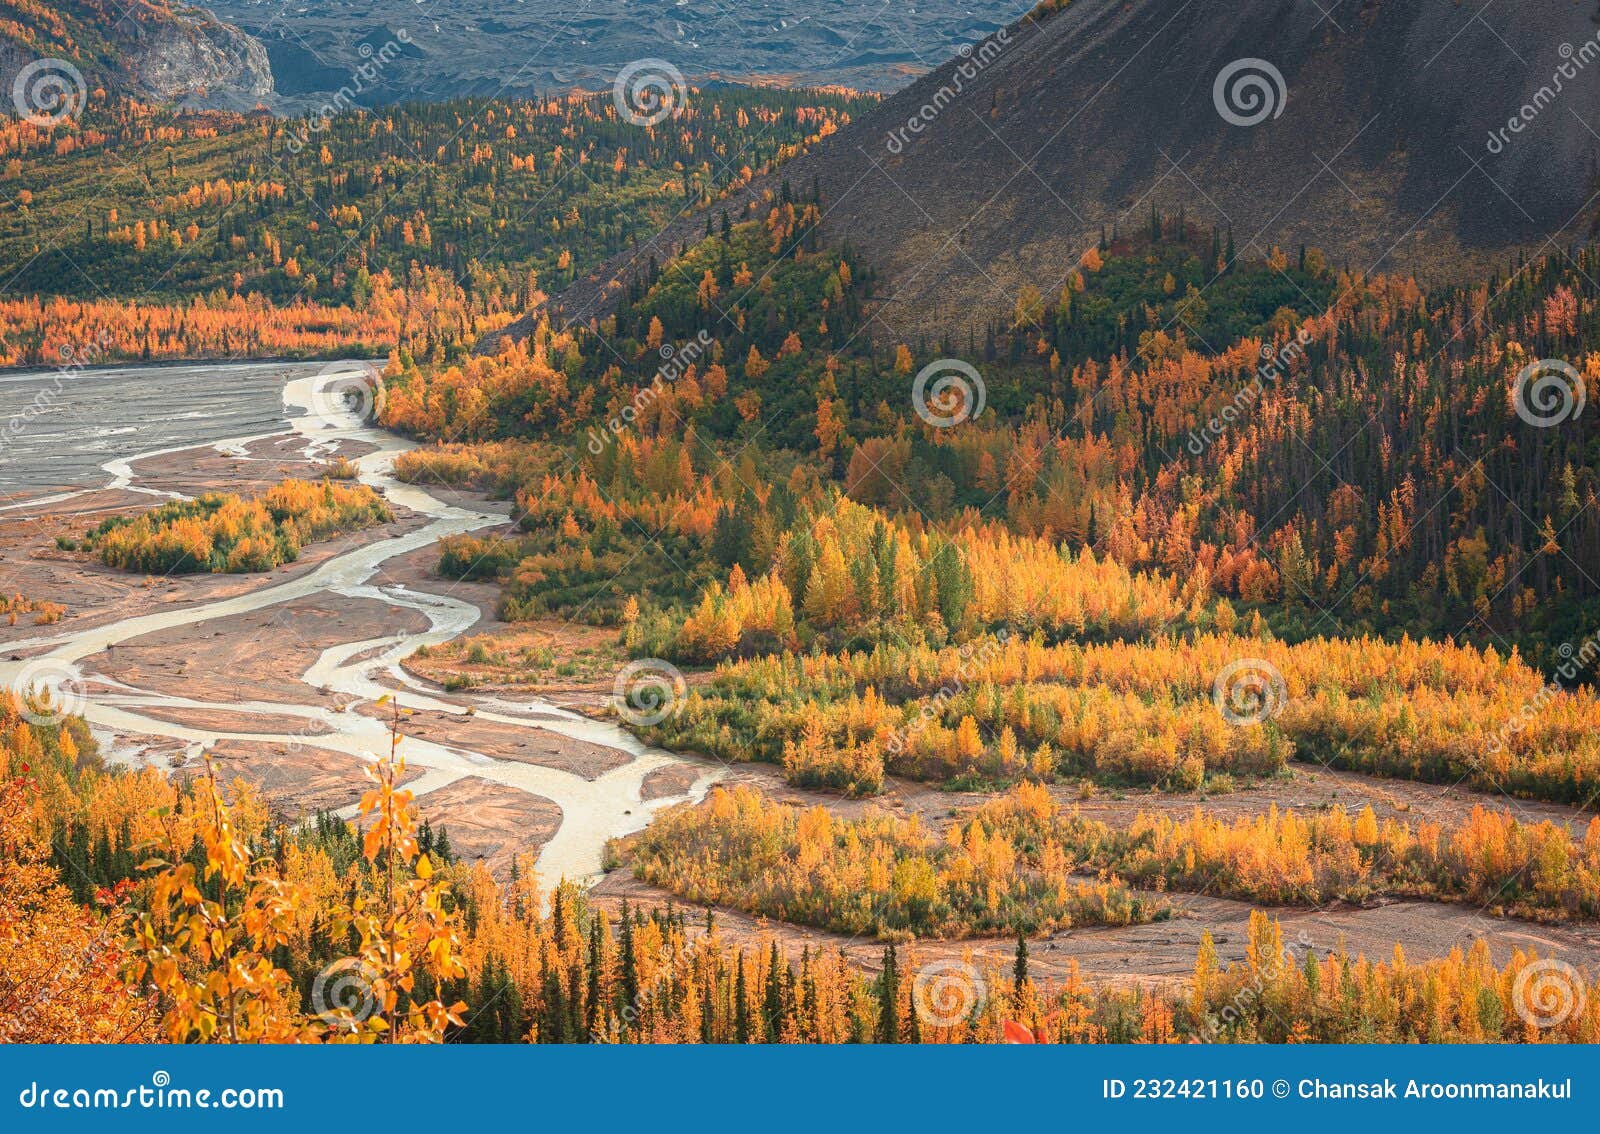 view of matanuska river from highway , alaska in fall season.